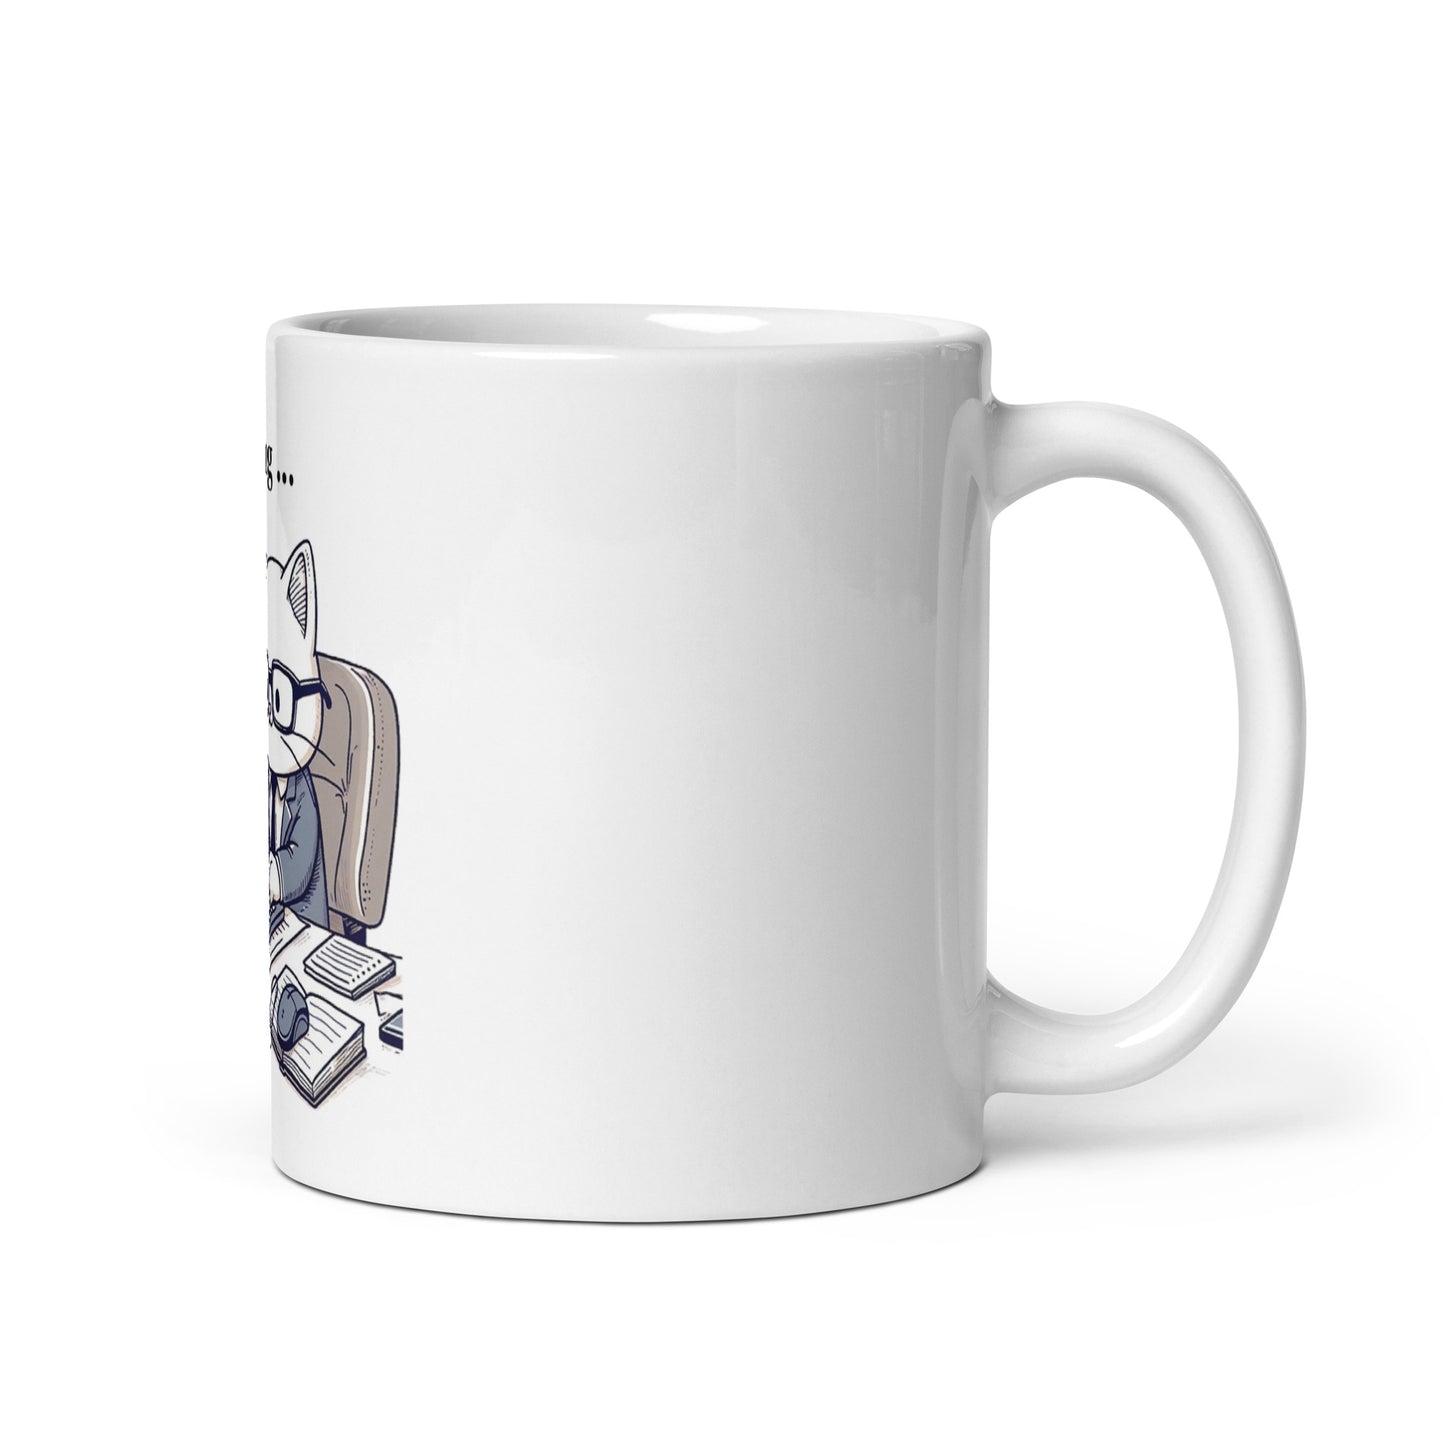 Coding Kitty mug